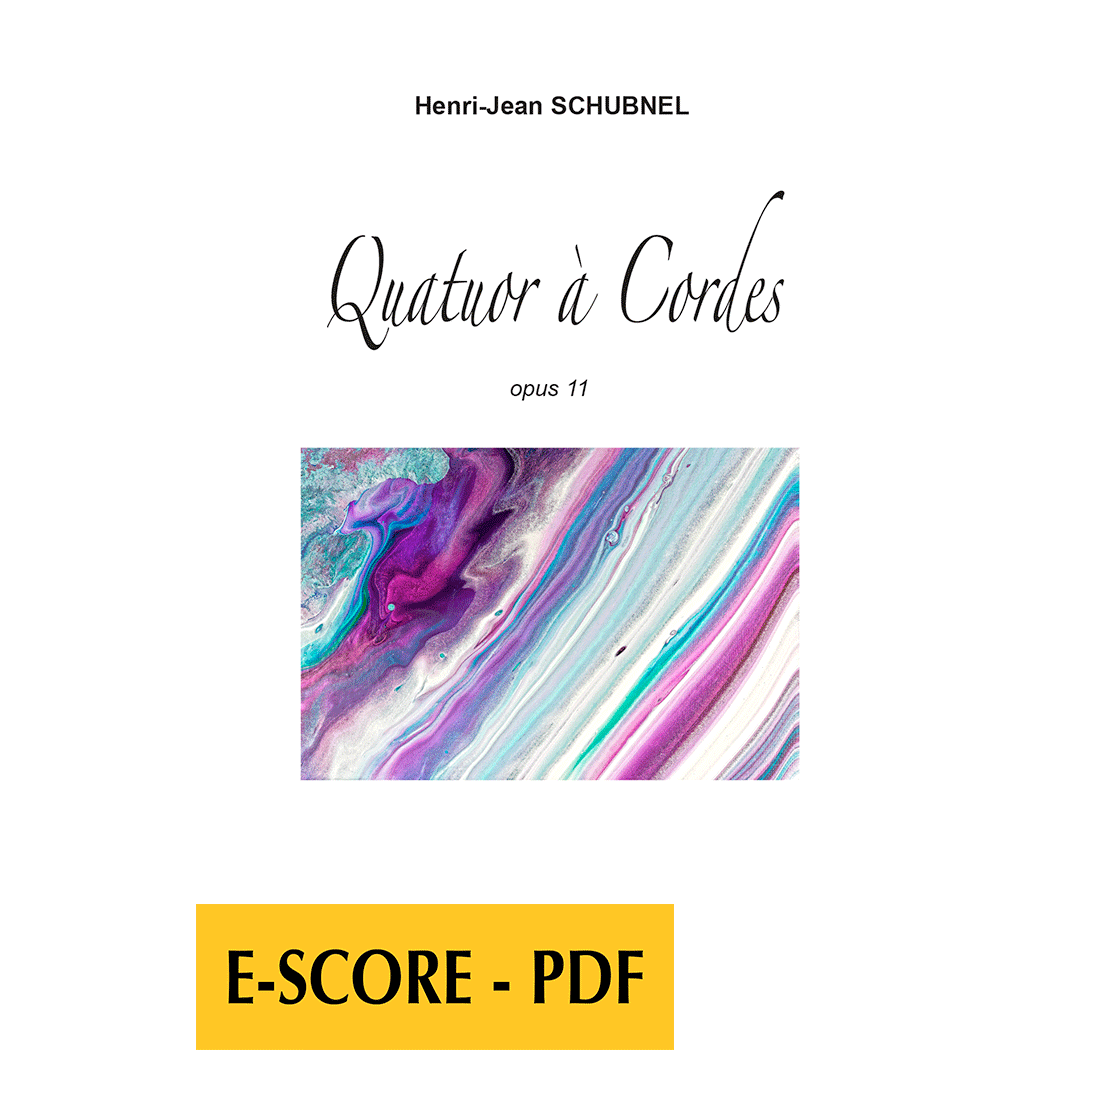 Quatuor à cordes - opus 11 - E-score PDF